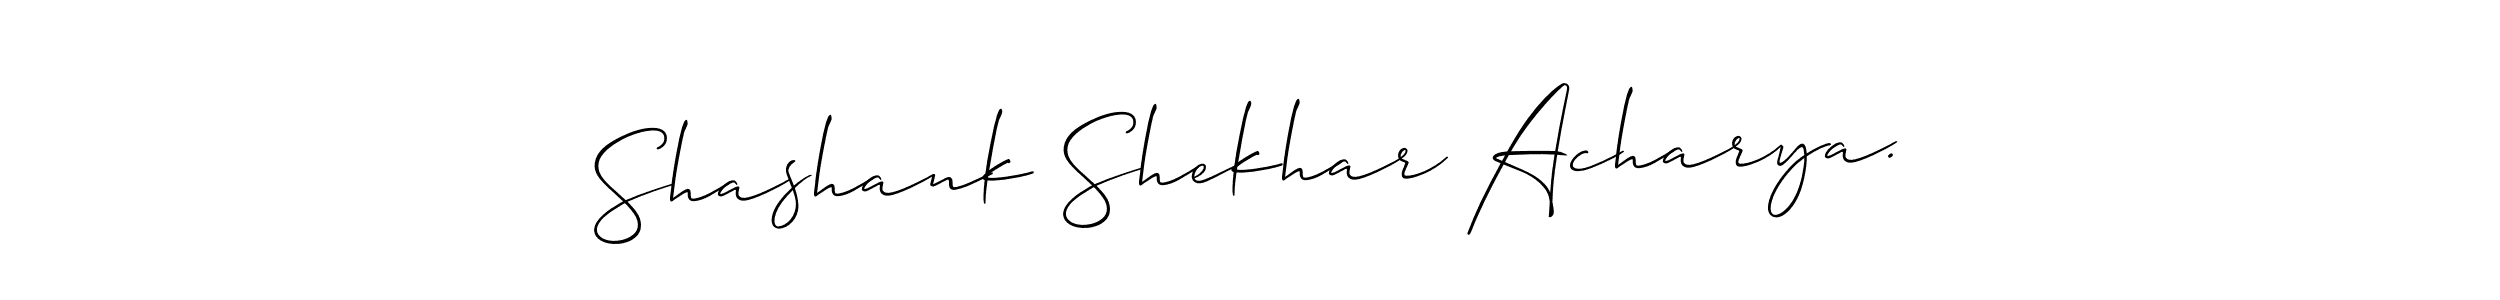 Shashank Shekhar Acharya. stylish signature style. Best Handwritten Sign (Allison_Script) for my name. Handwritten Signature Collection Ideas for my name Shashank Shekhar Acharya.. Shashank Shekhar Acharya. signature style 2 images and pictures png